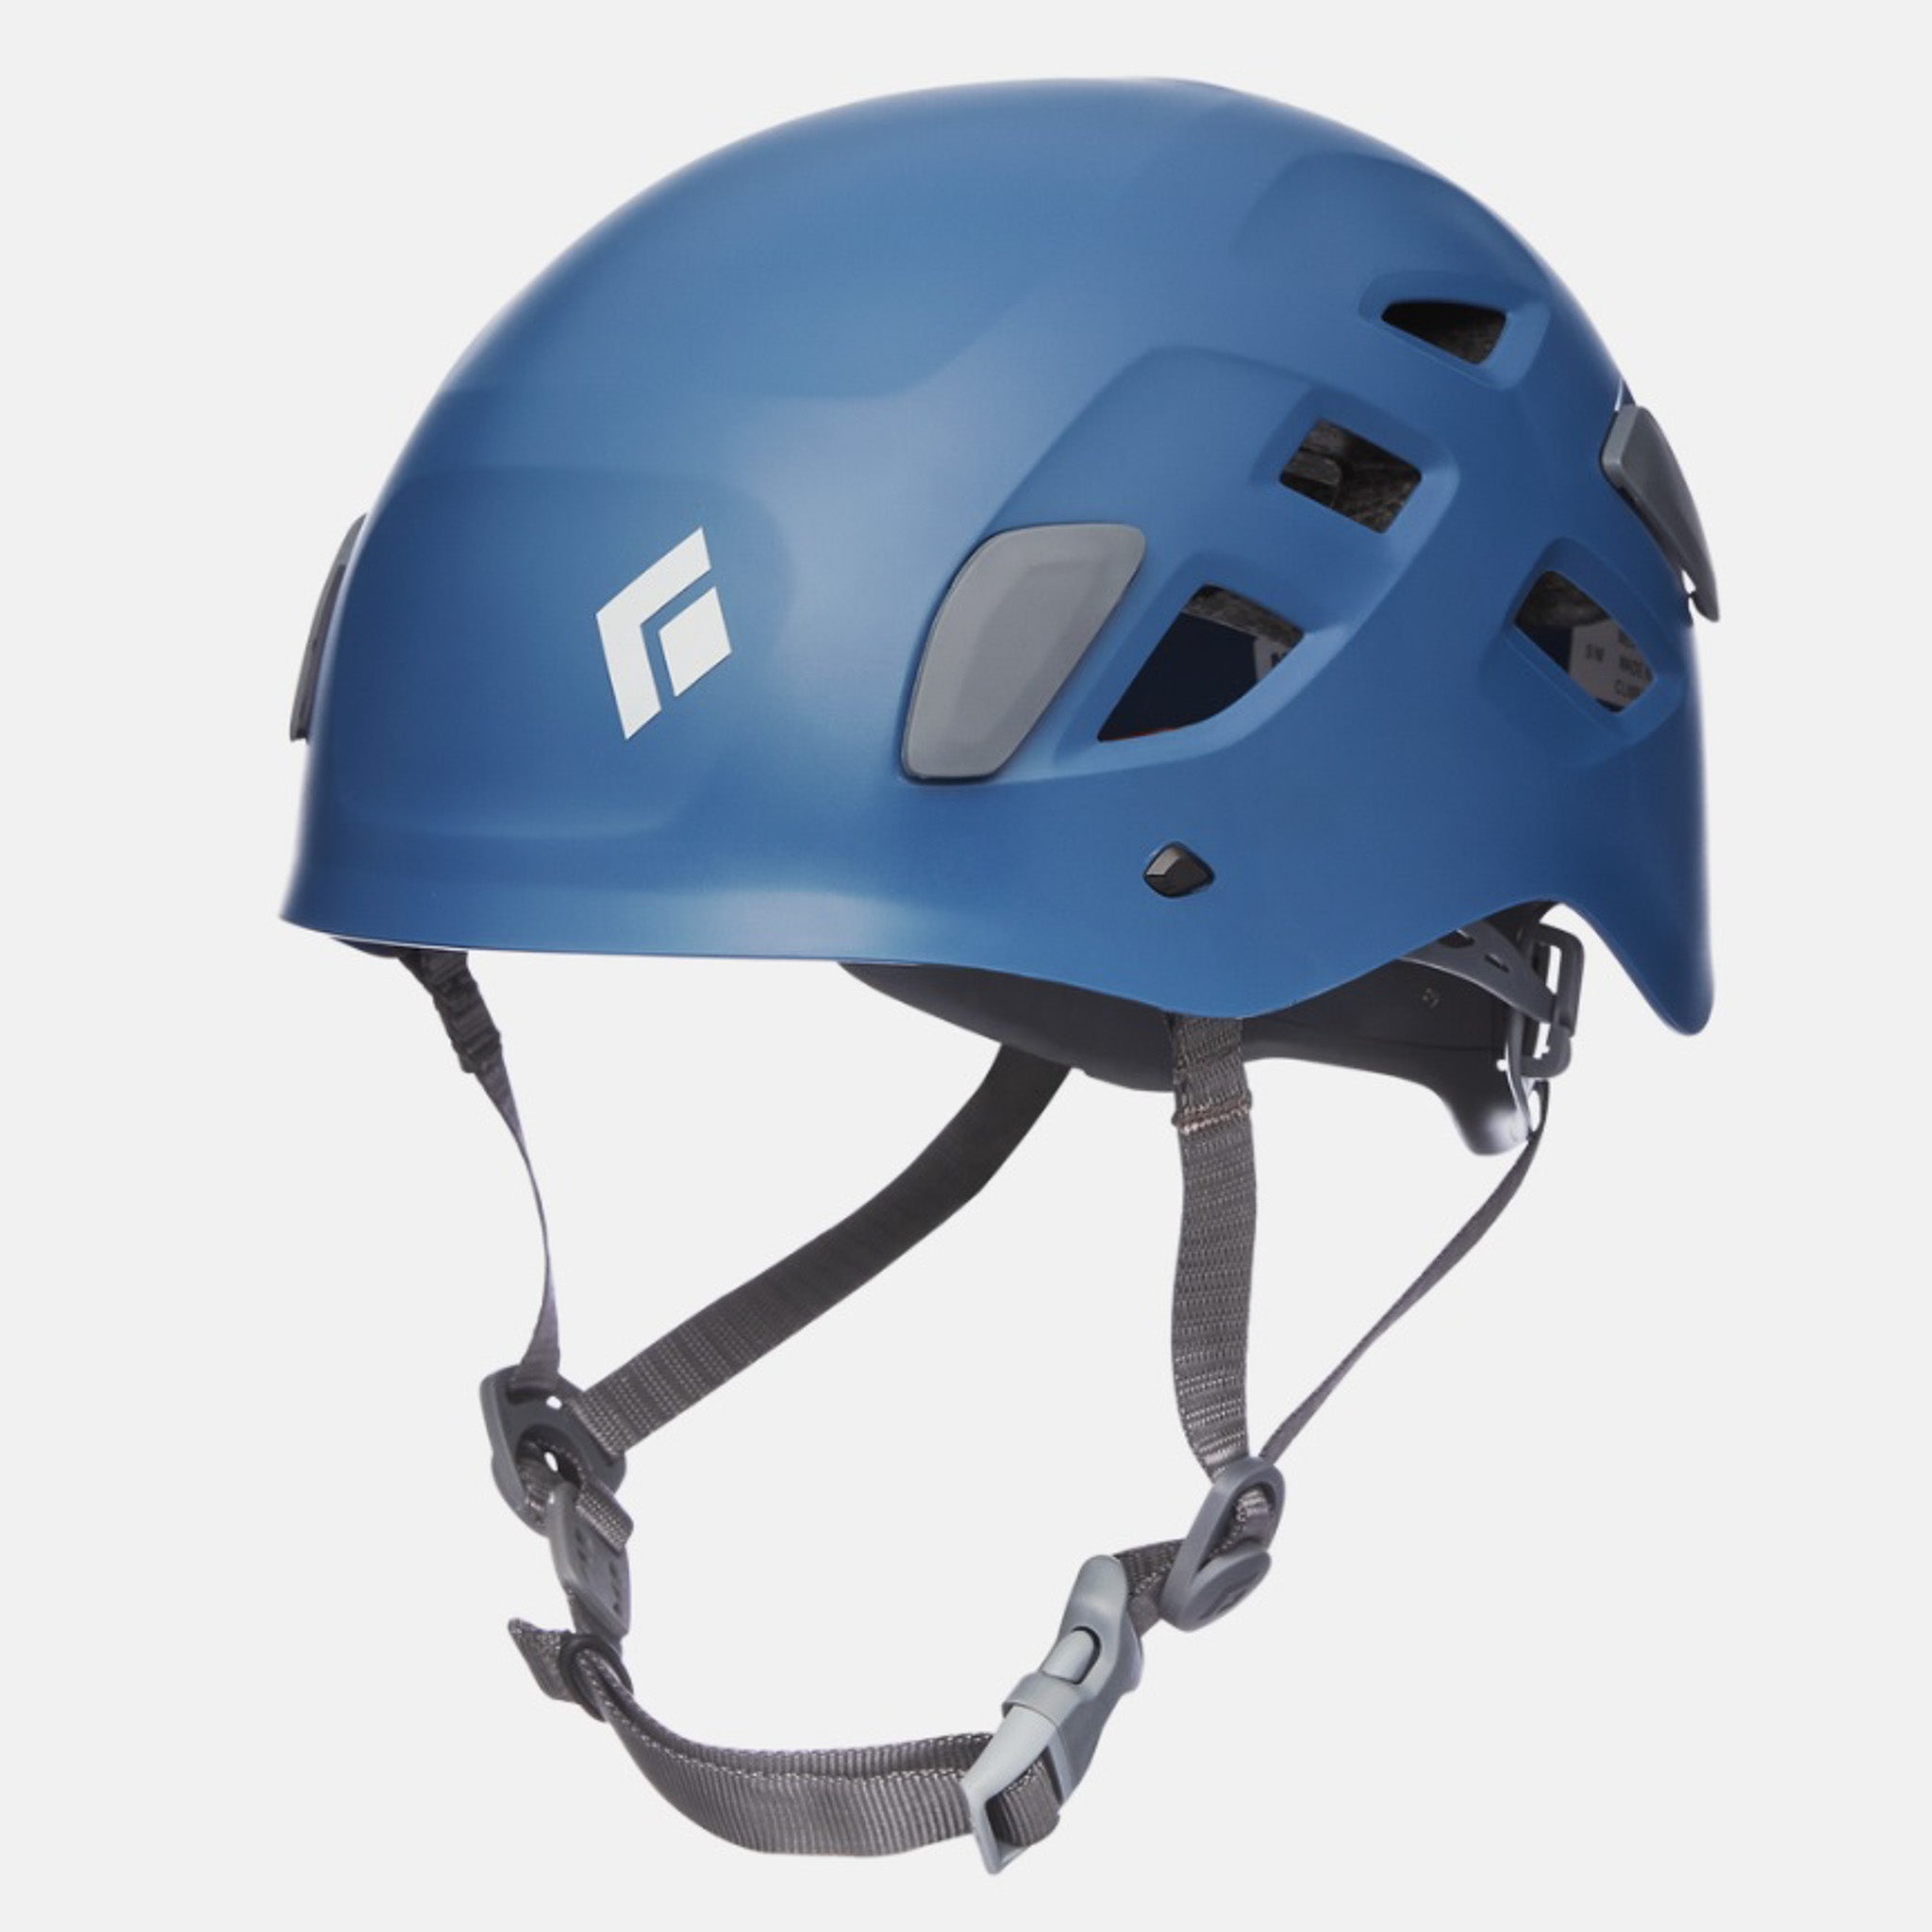 Climbing Helmet Rental